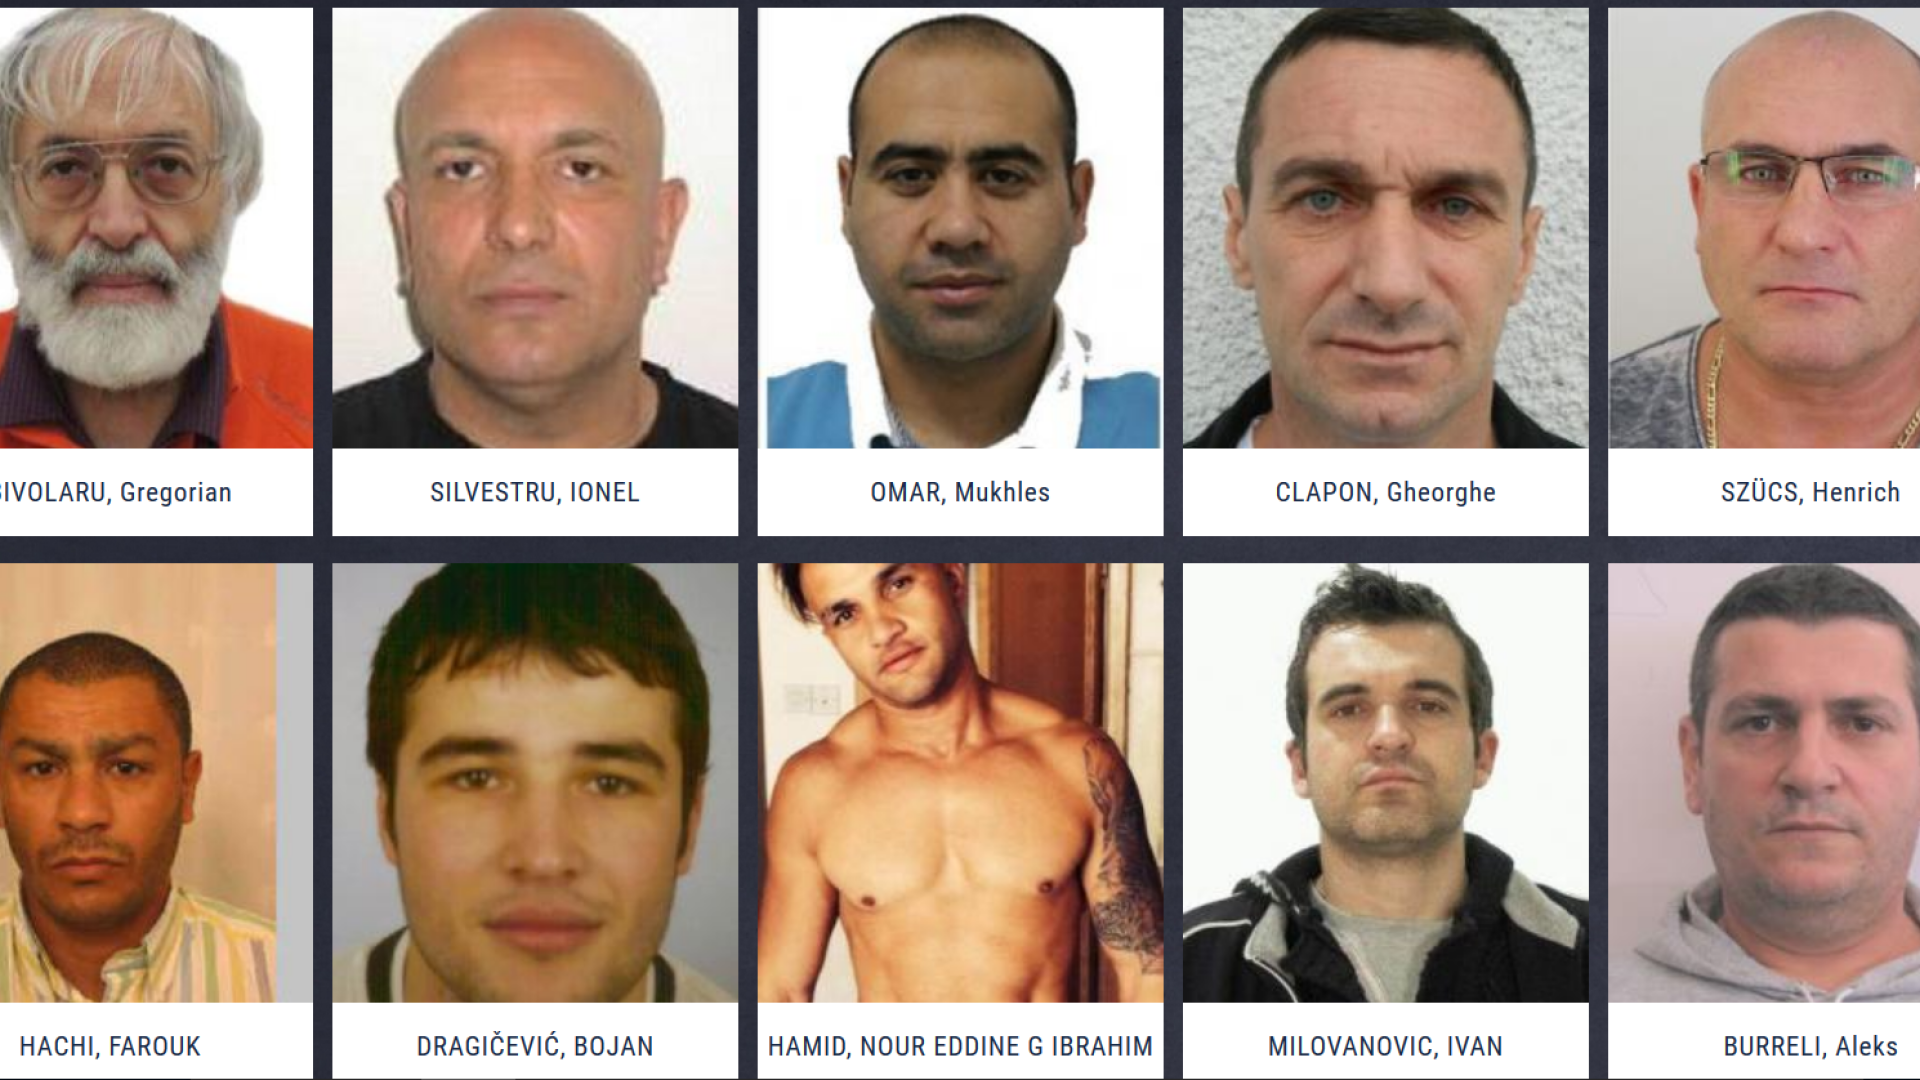 romani, lista europol, infractori, most wanted,